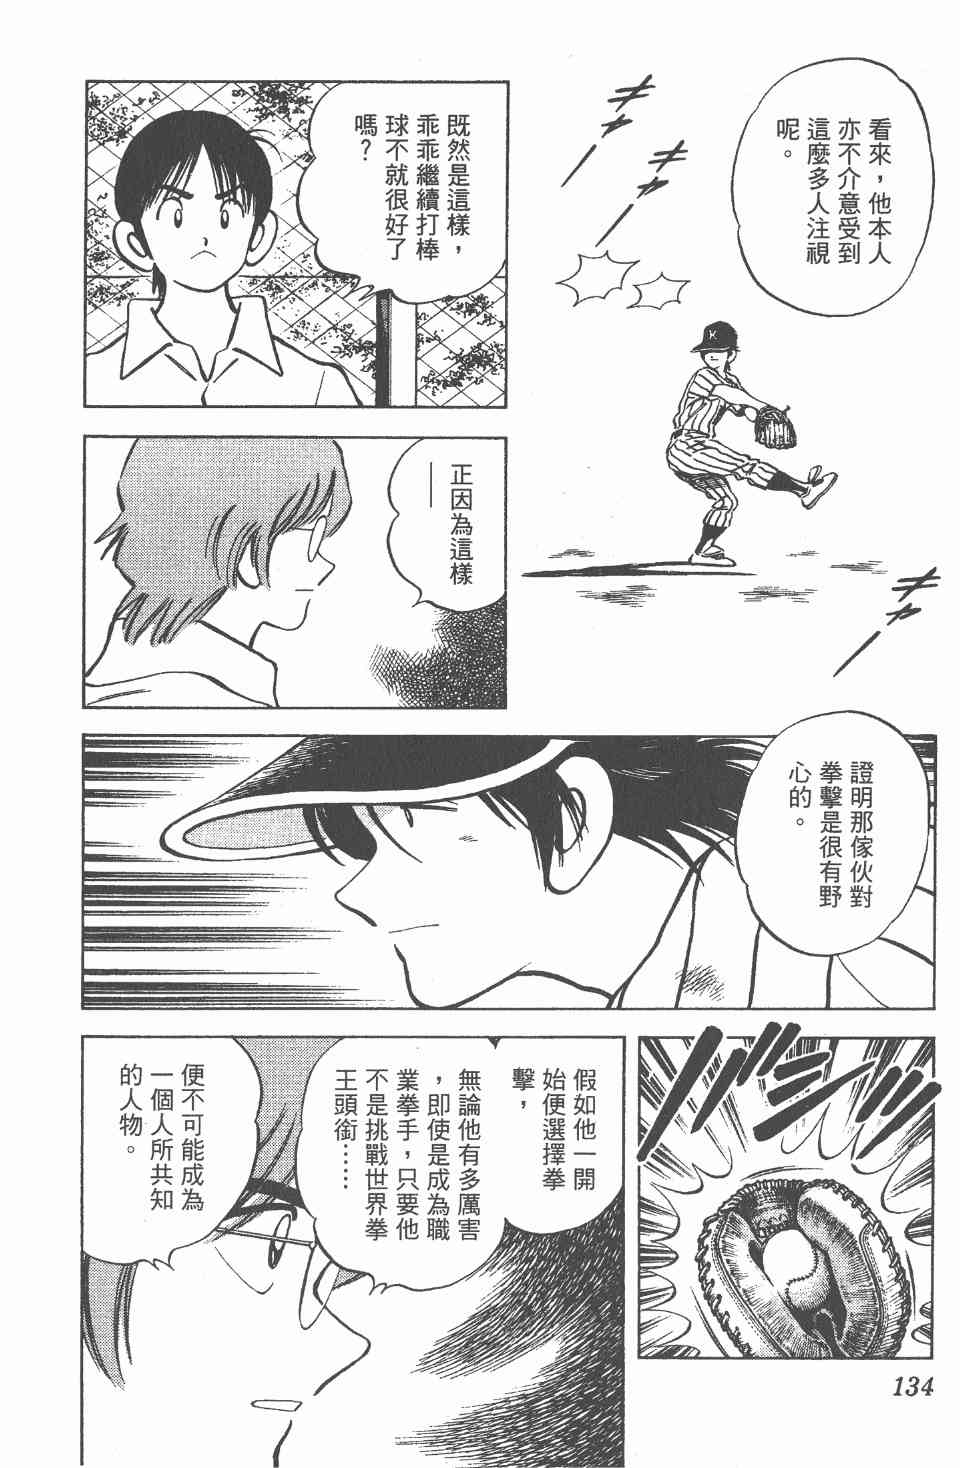 《Katsu!》漫画 青春交叉点09卷